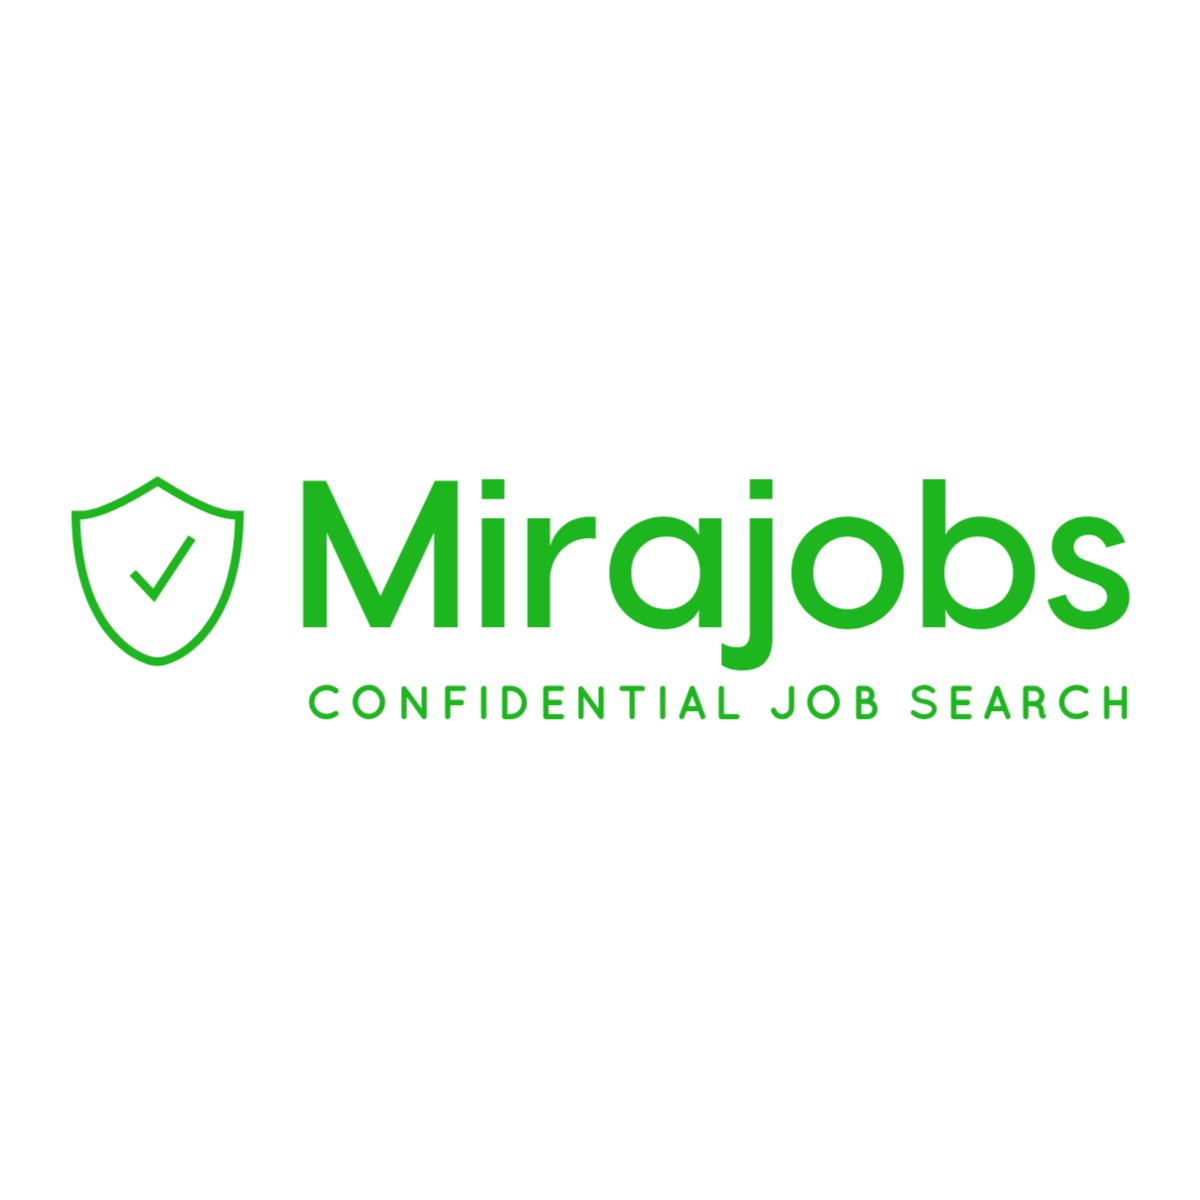 Dovenmuehle Mortgage - Employer - Mirajobs